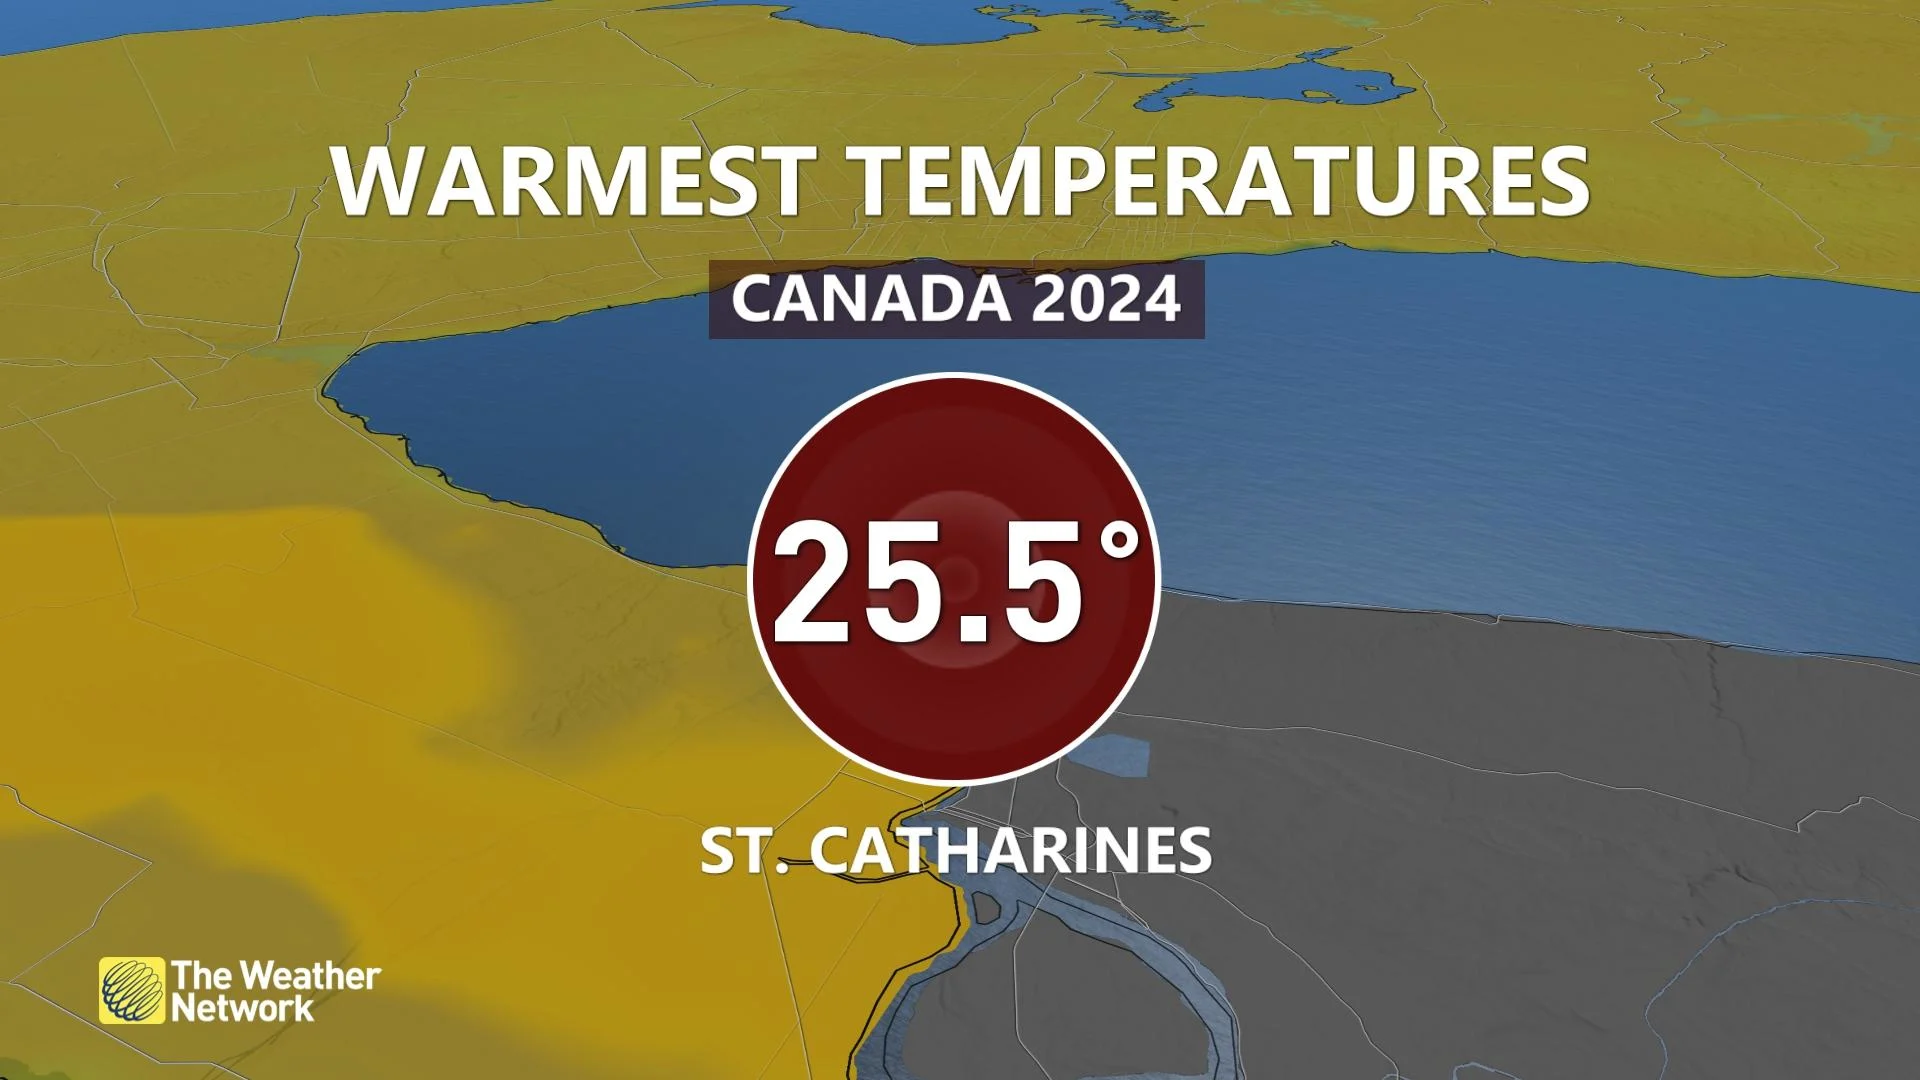 St. Catharines, Ont. hitting 25. 5 C Tuesday